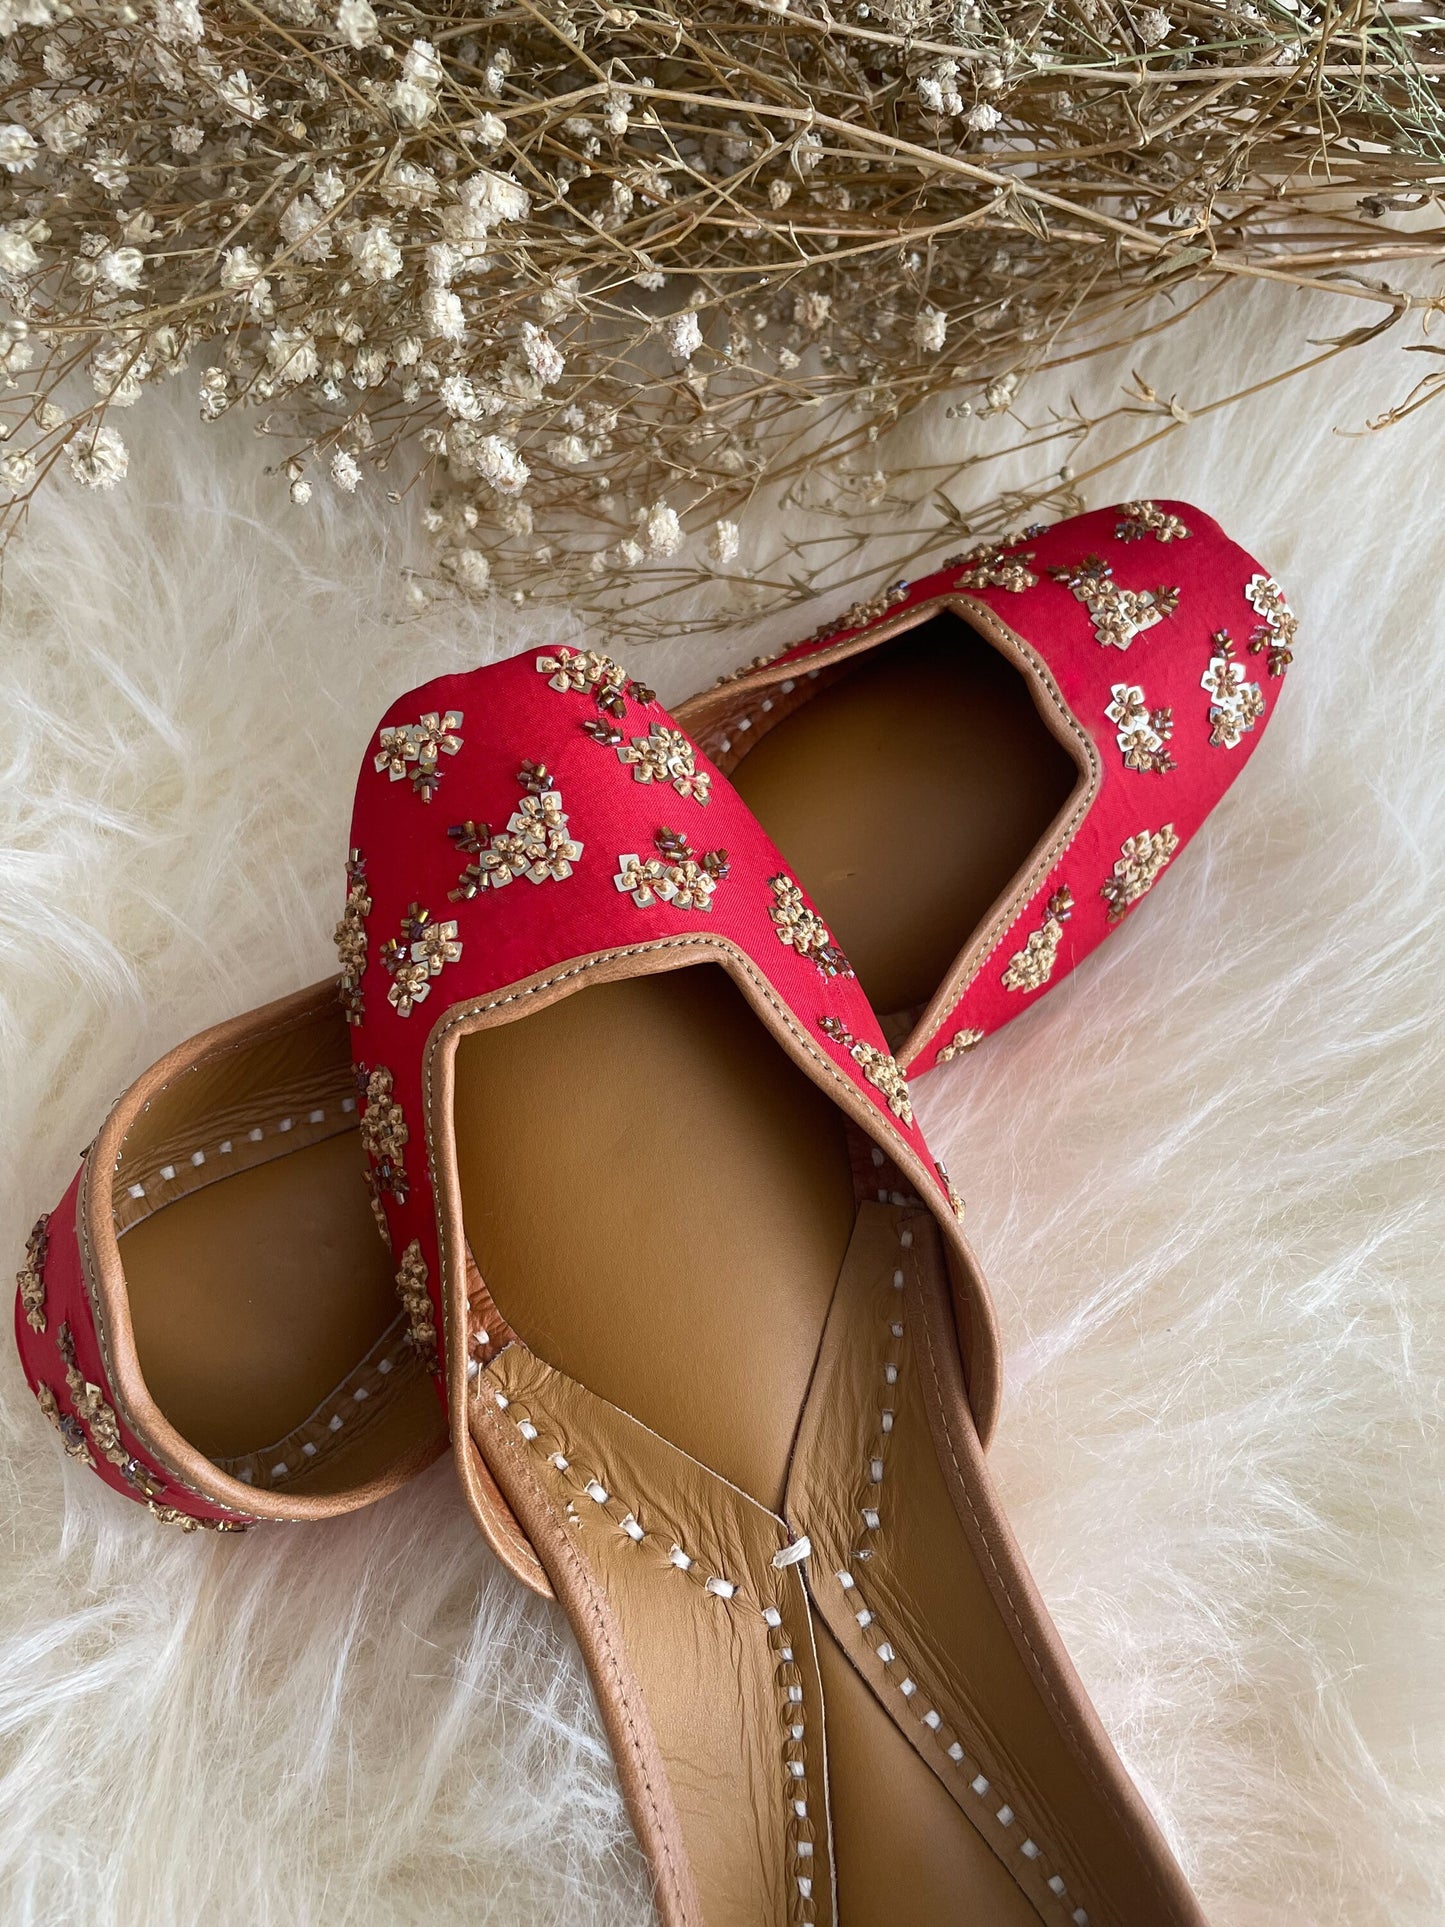 Red Juttis Punjabi Jooti Women Shoes Khussa Embroidered pumps Bridal Shoes